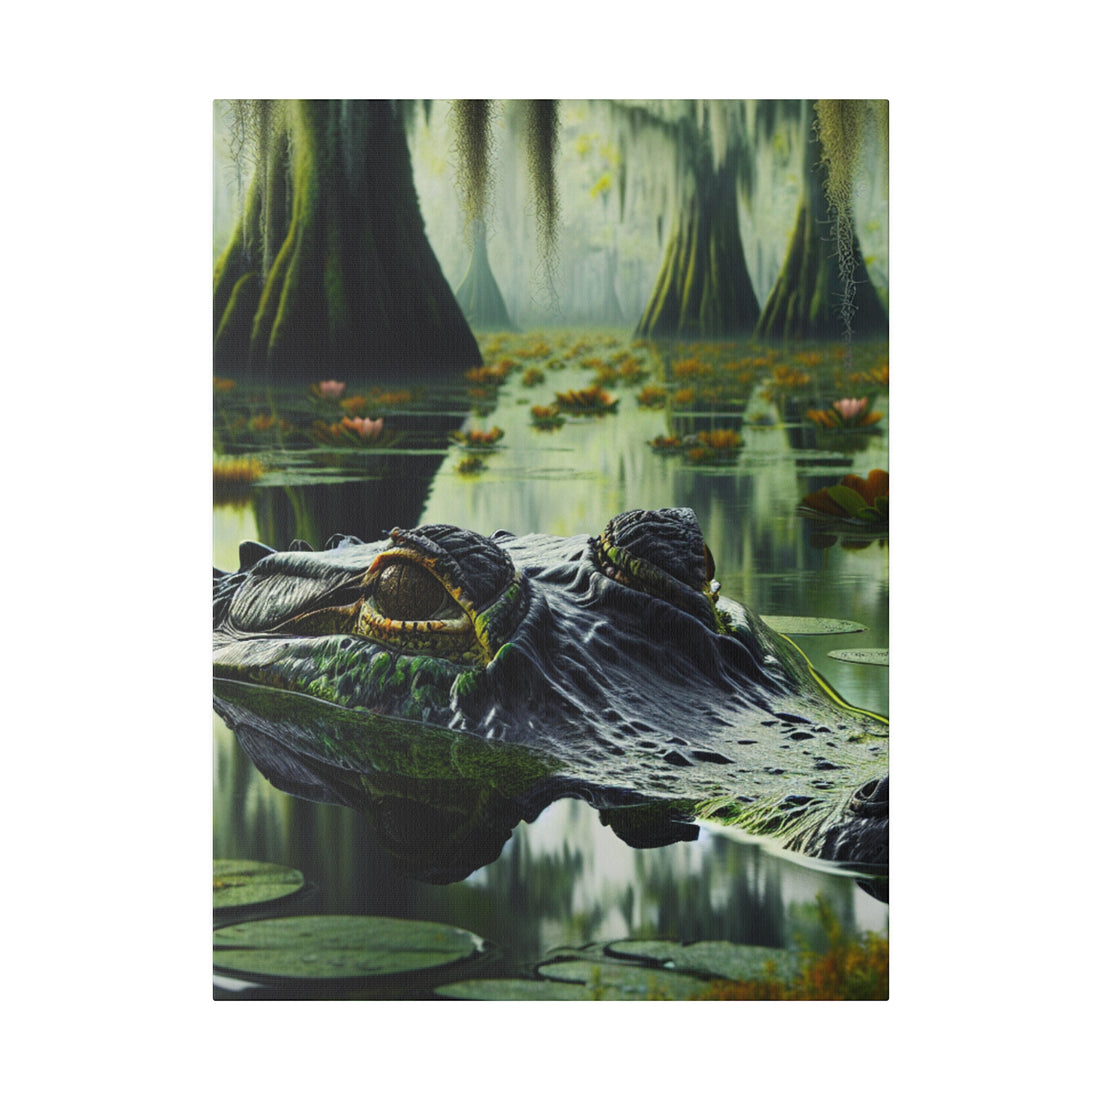 "Alligator Allure: Simply Captivating Canvas Wall Art"